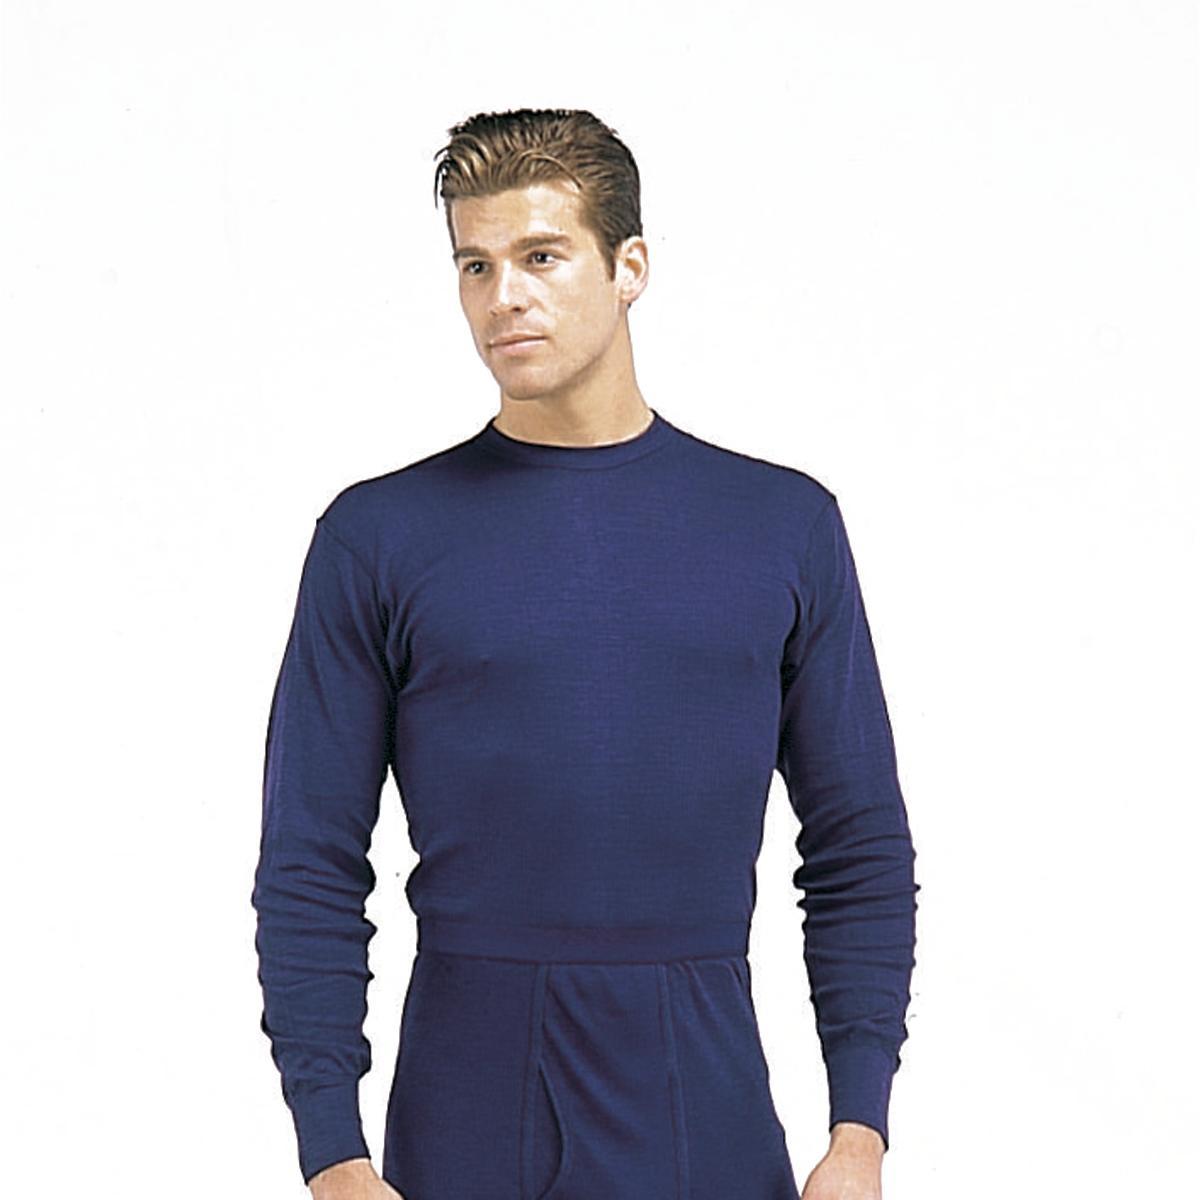 Blue Polypropylene Thermal Long Underwear Tops, Shirts - image 1 of 3